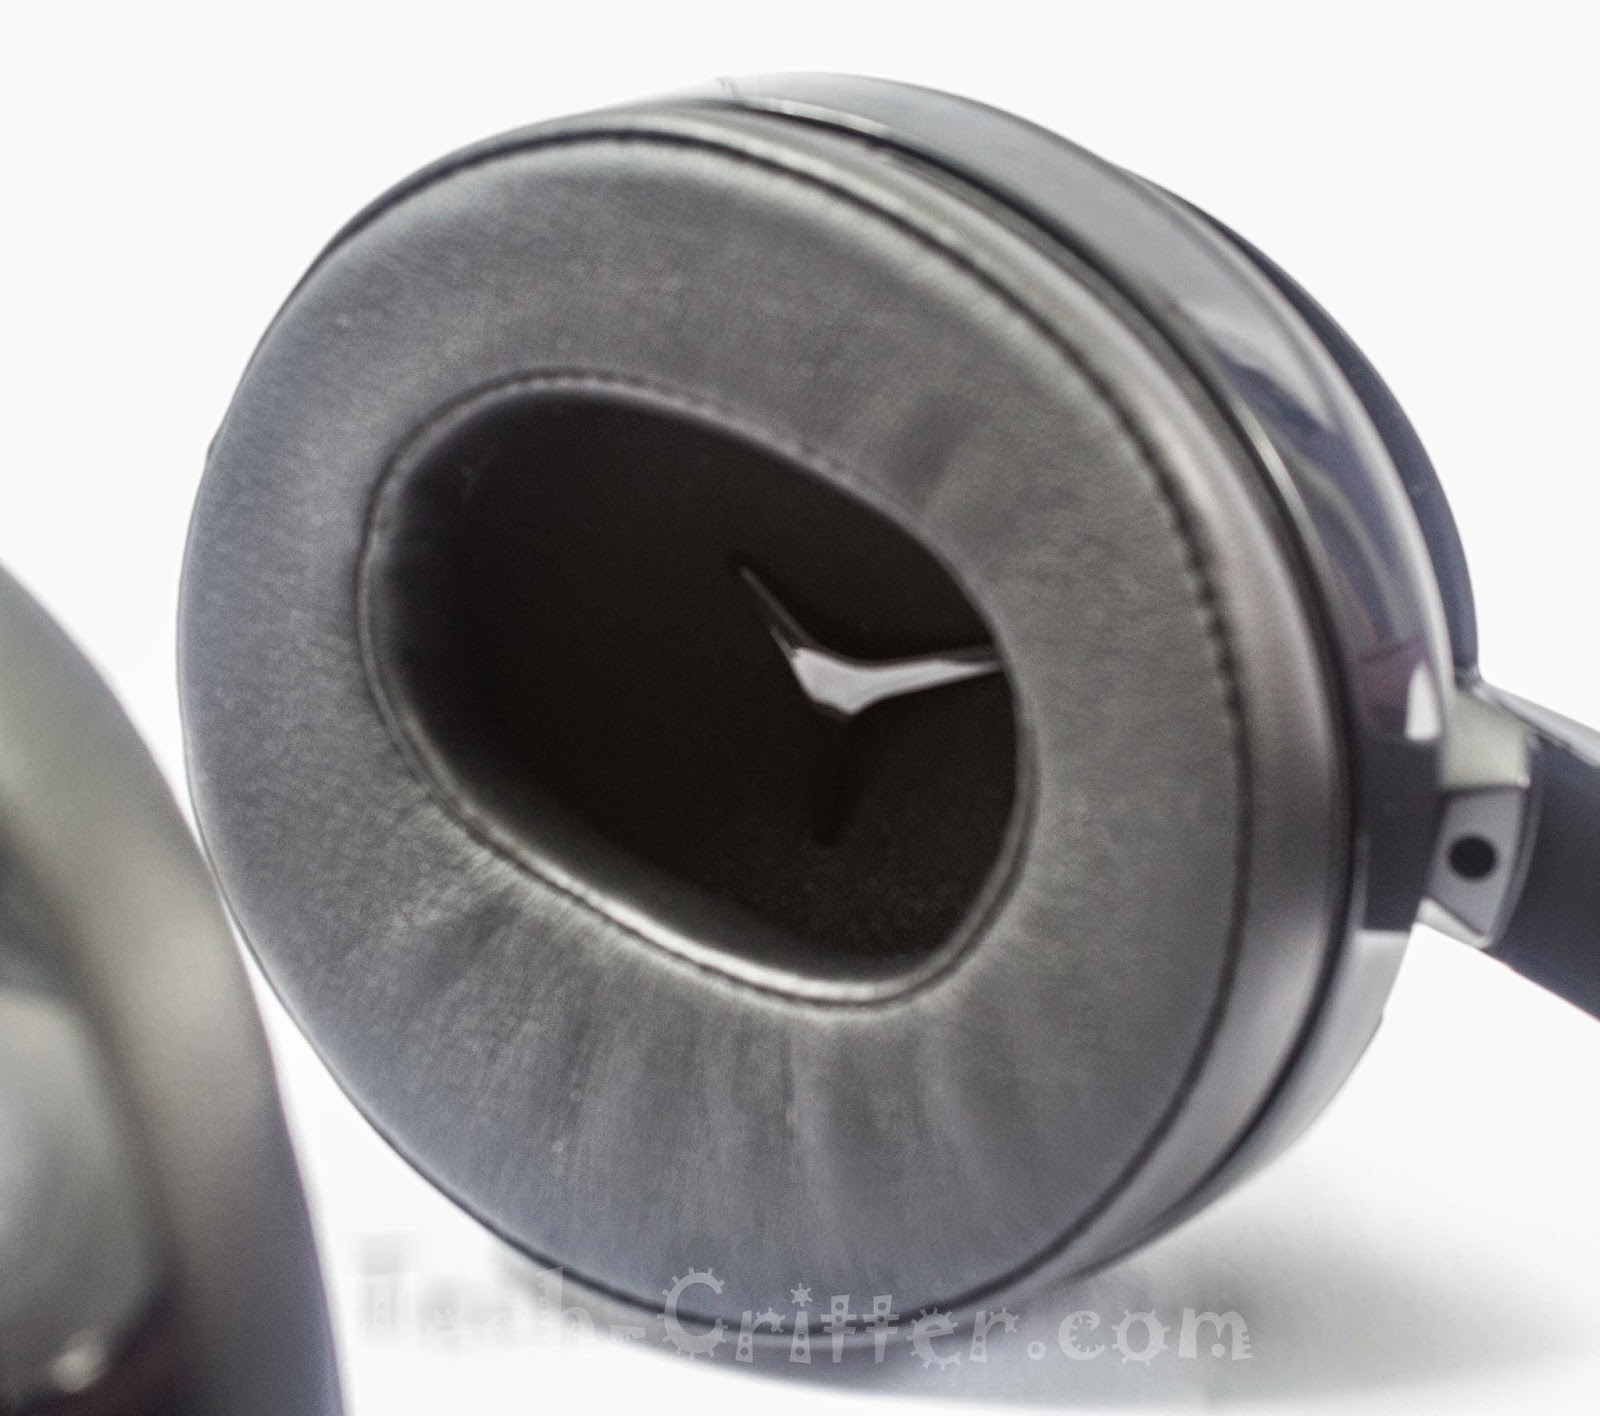 Unboxing & Review: Roccat Kave XTD 5.1 Digital Surround Sound Headset 69